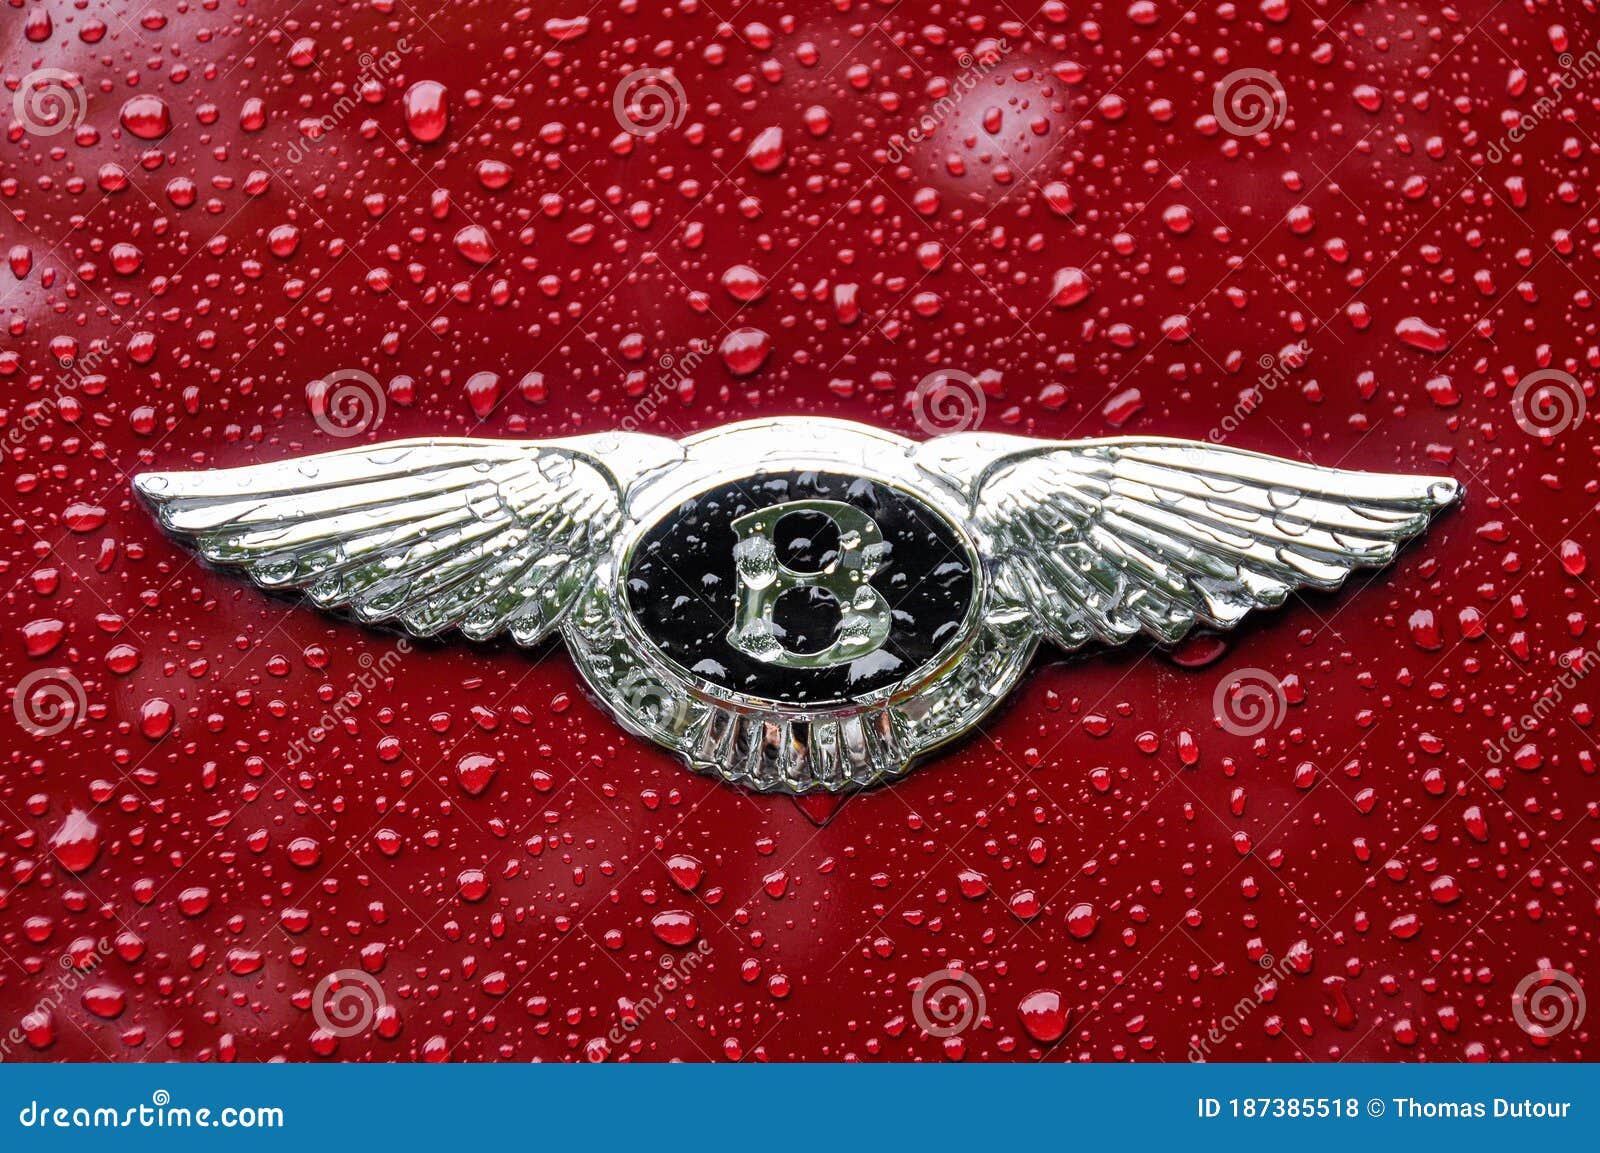 501 Bentley Logo Photos Free Royalty Free Stock Photos From Dreamstime